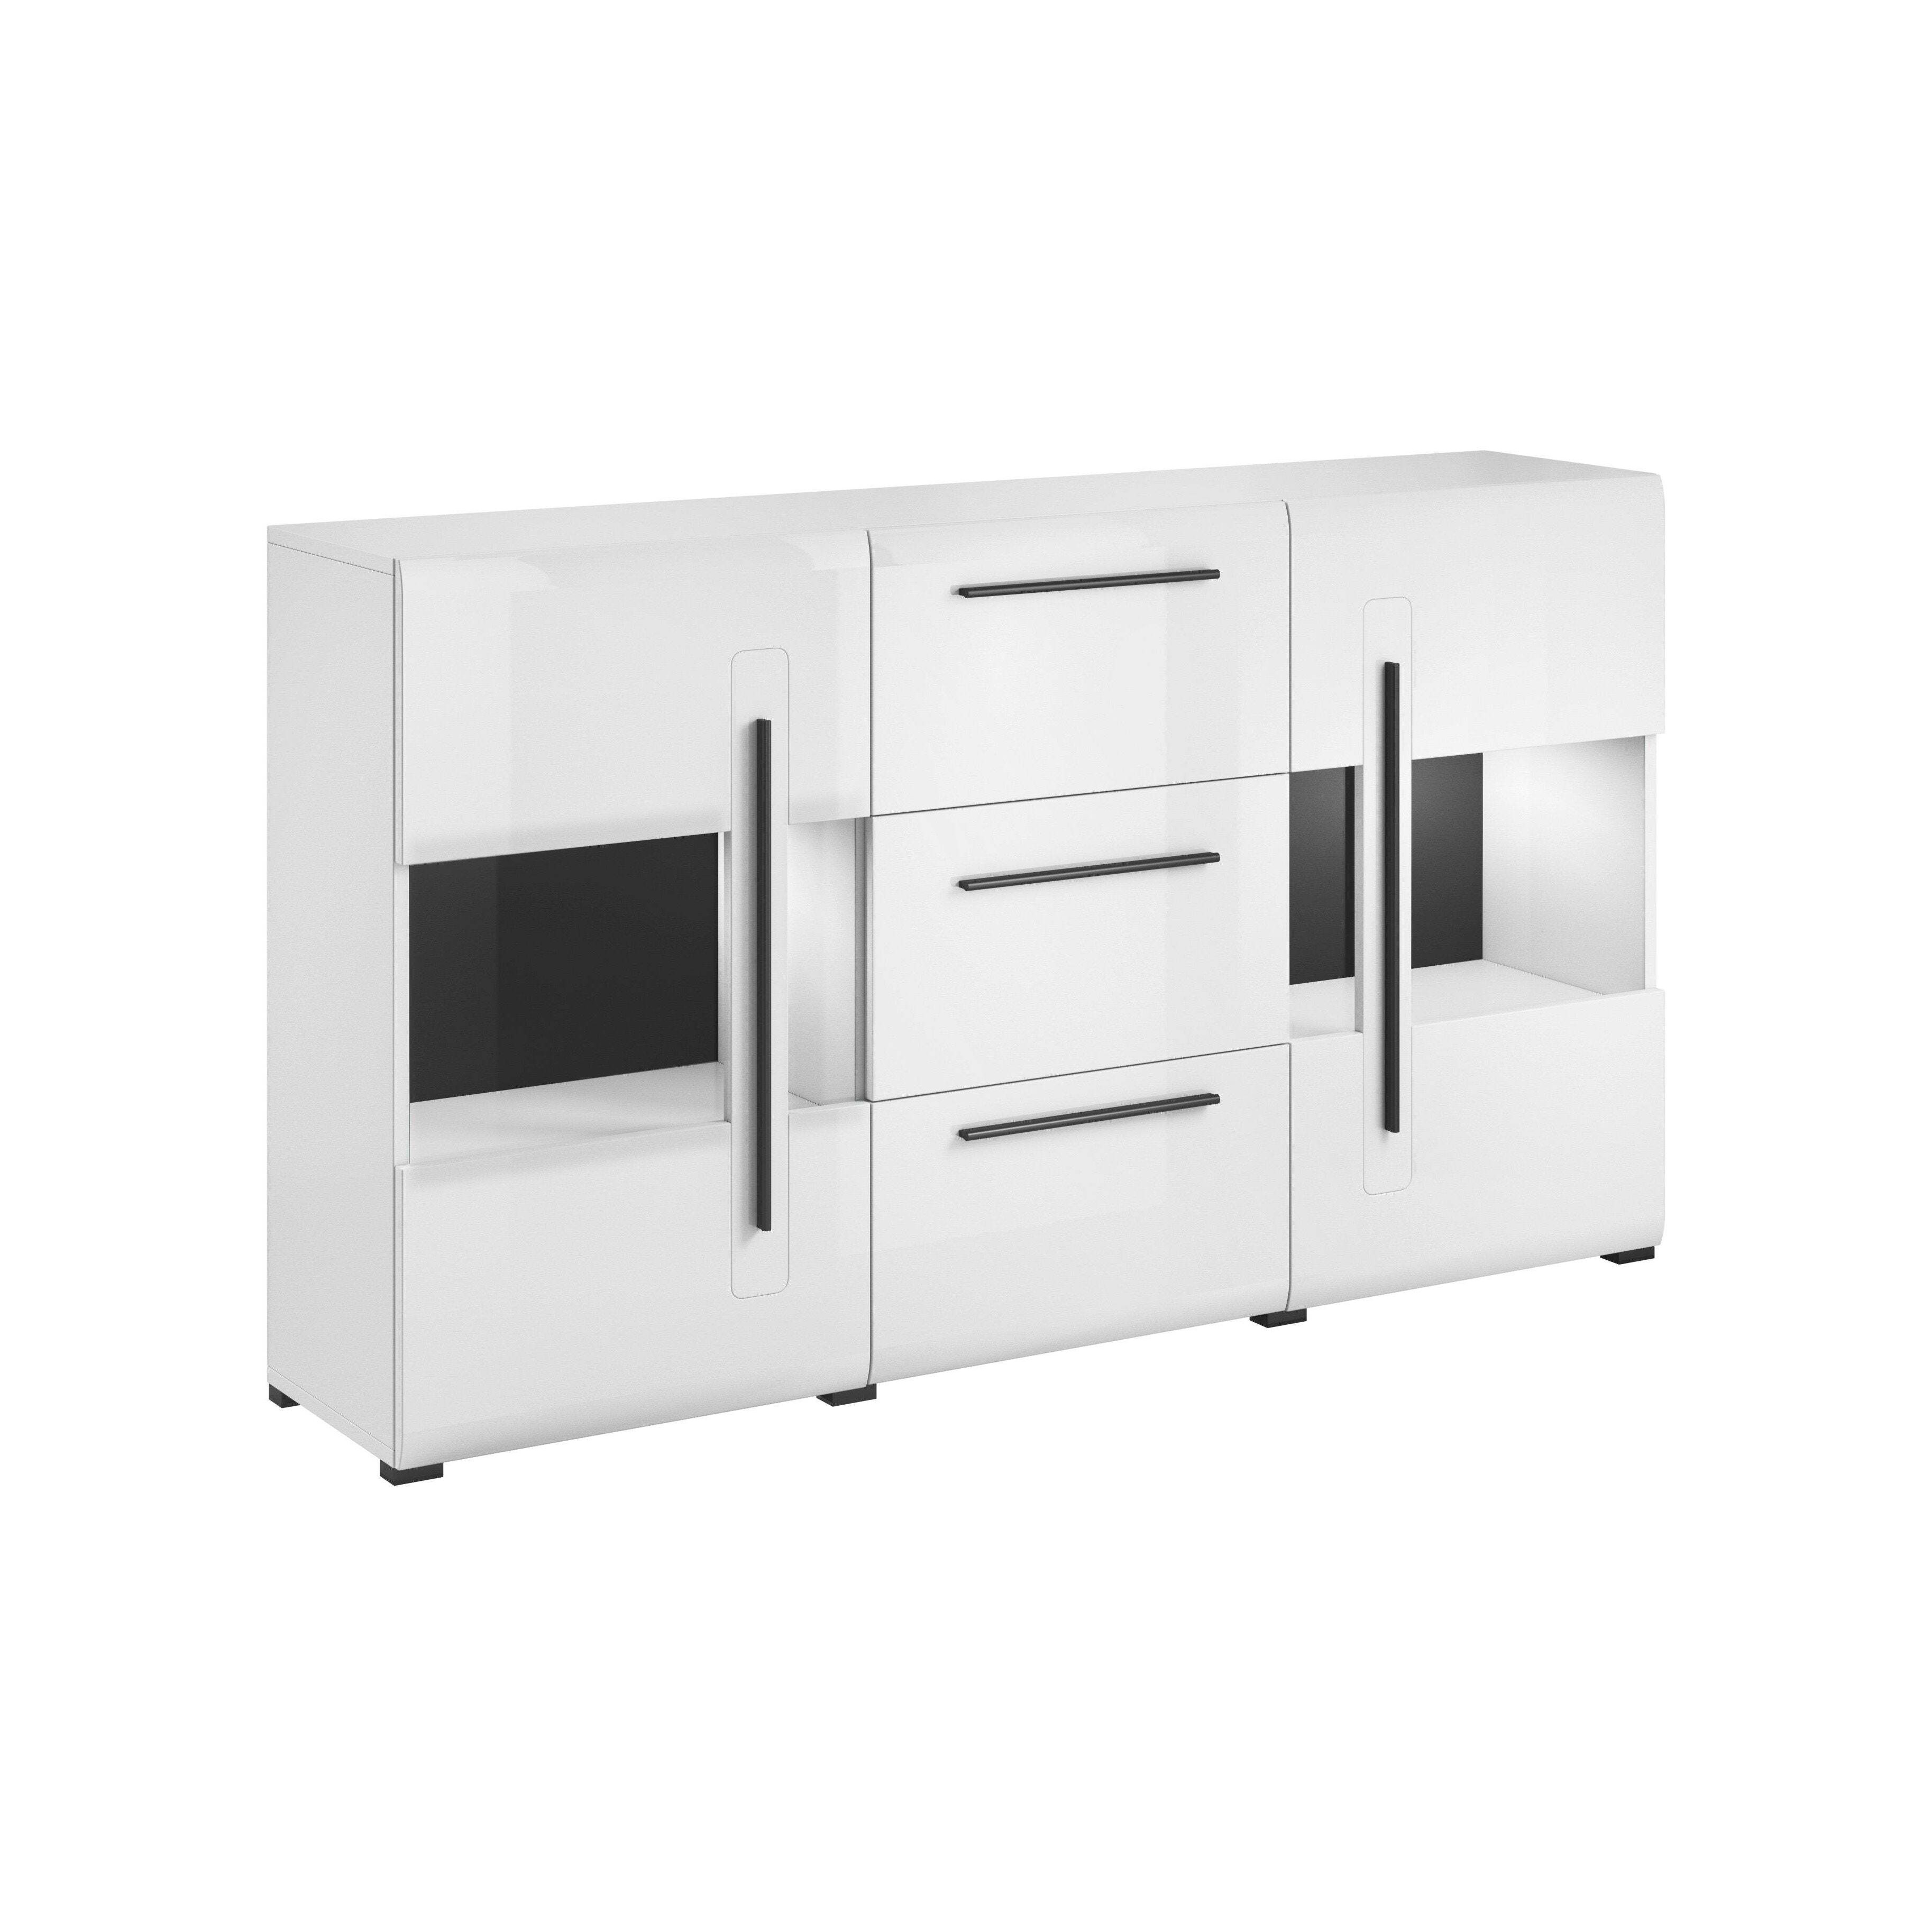 Tulsa 28 Display Cabinet 180cm - White Gloss 180cm - image 1